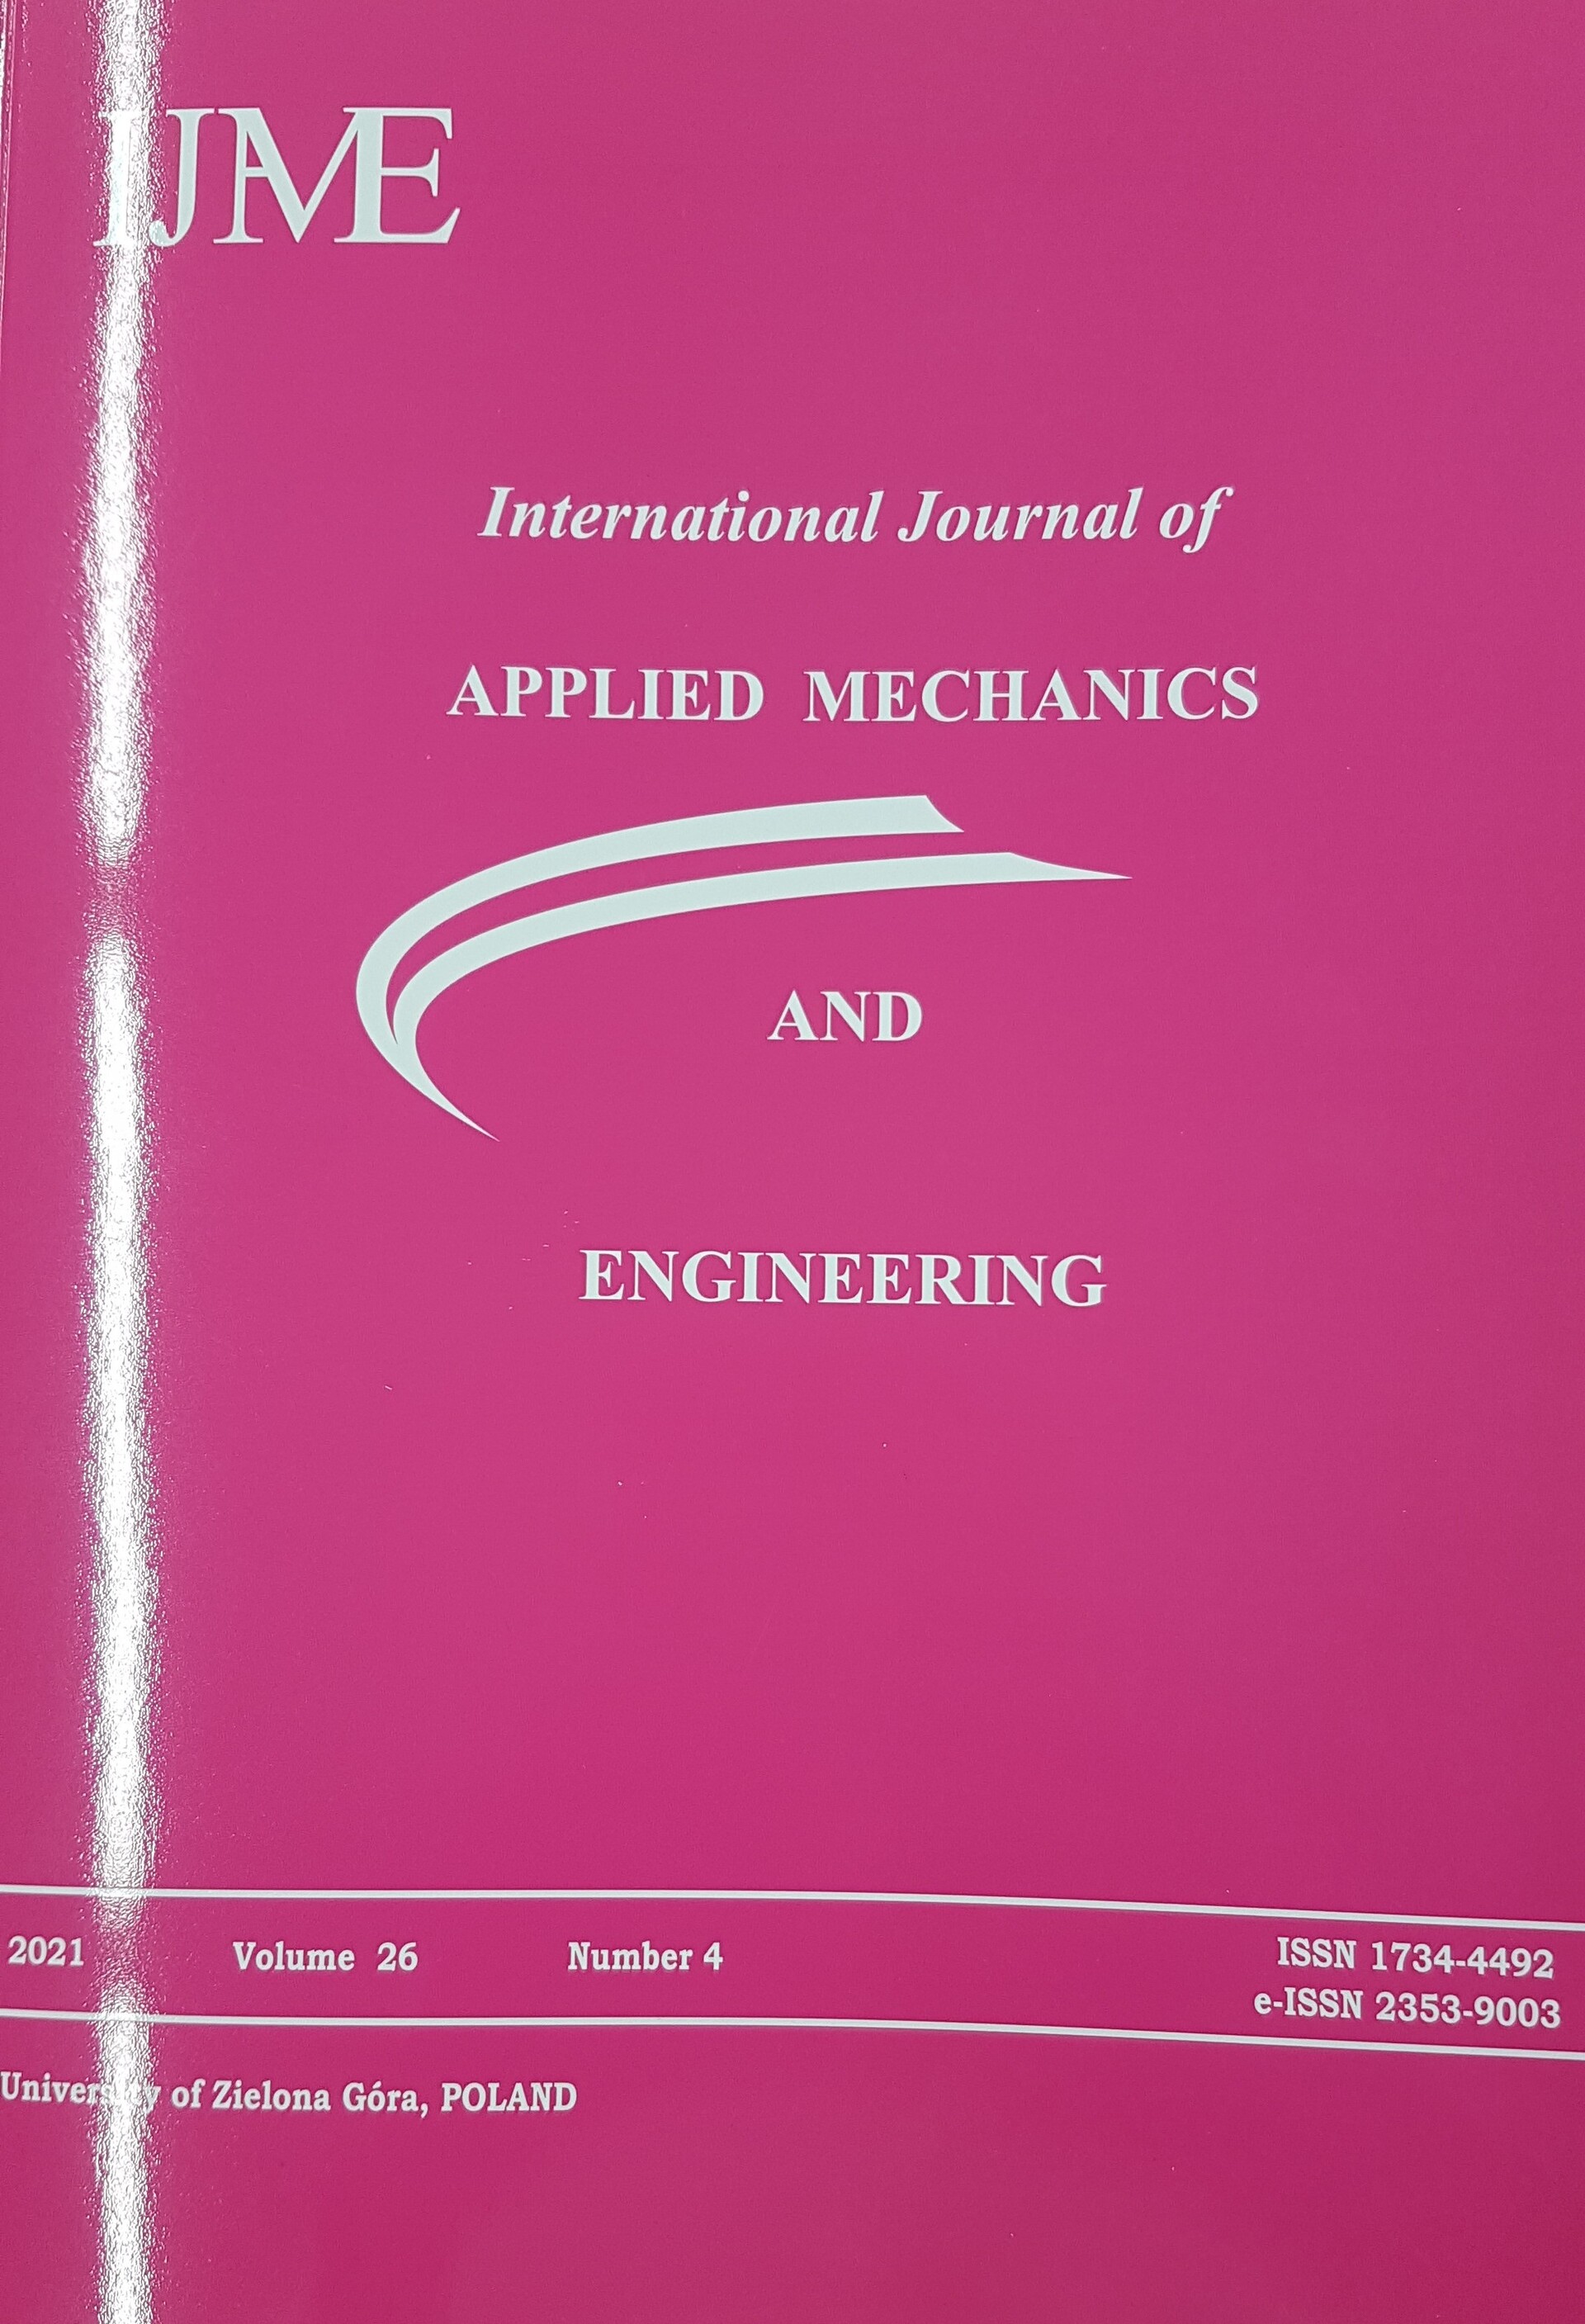 10international_journal_of_applied_mechanics_and_engineering-1.jpg